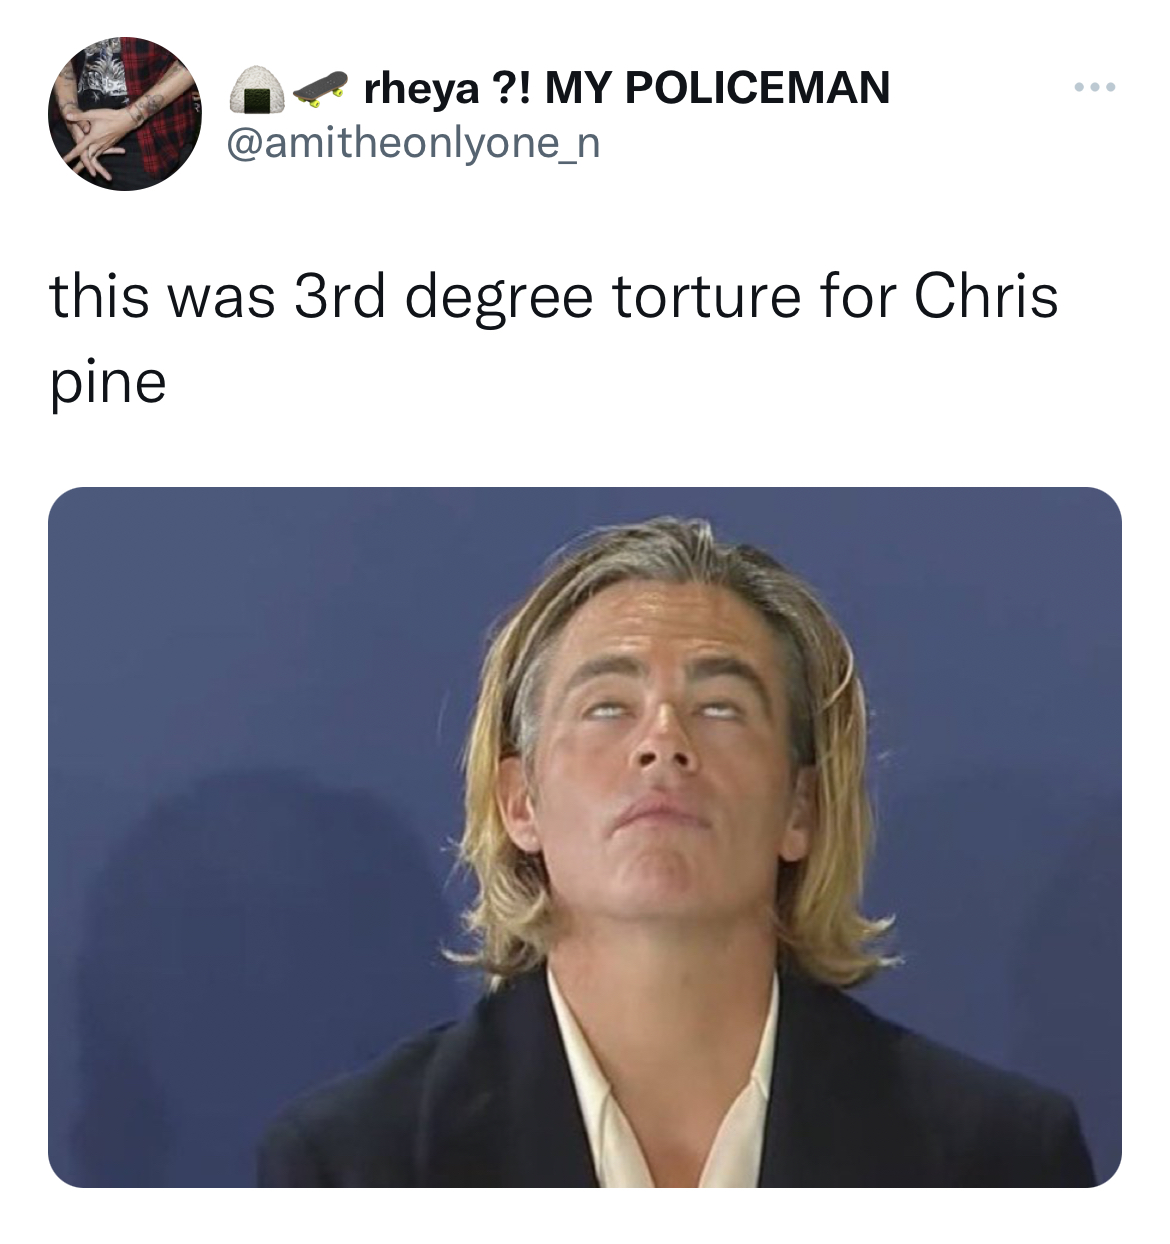 Chris Pine Venice Film Festival Memes - human behavior - rheya ?! My Policeman this was 3rd degree torture for Chris pine www